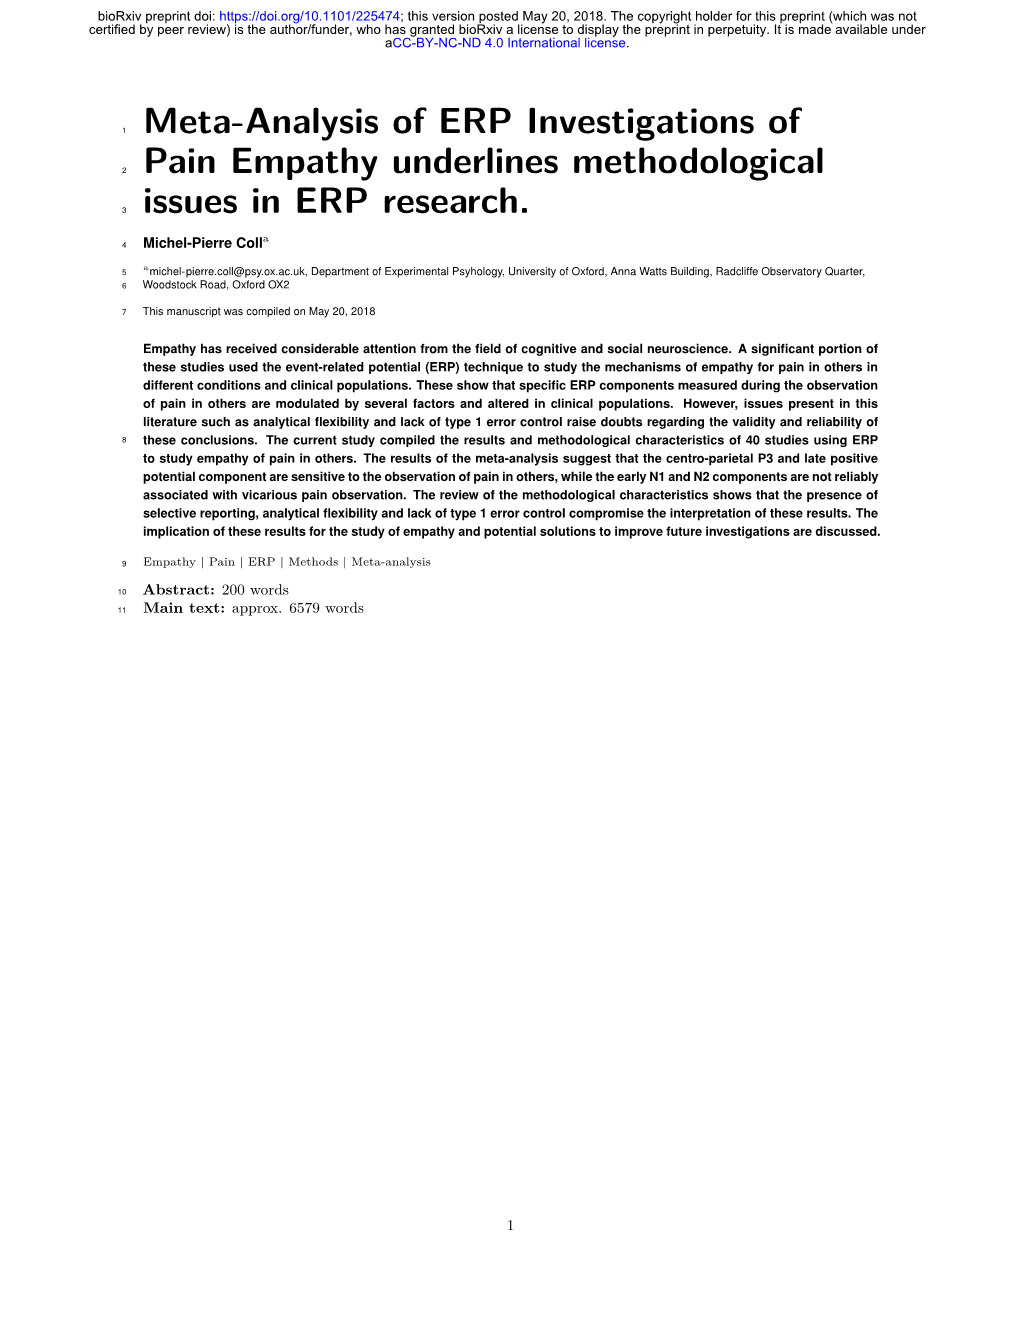 Meta-Analysis of ERP Investigations of Pain Empathy Underlines